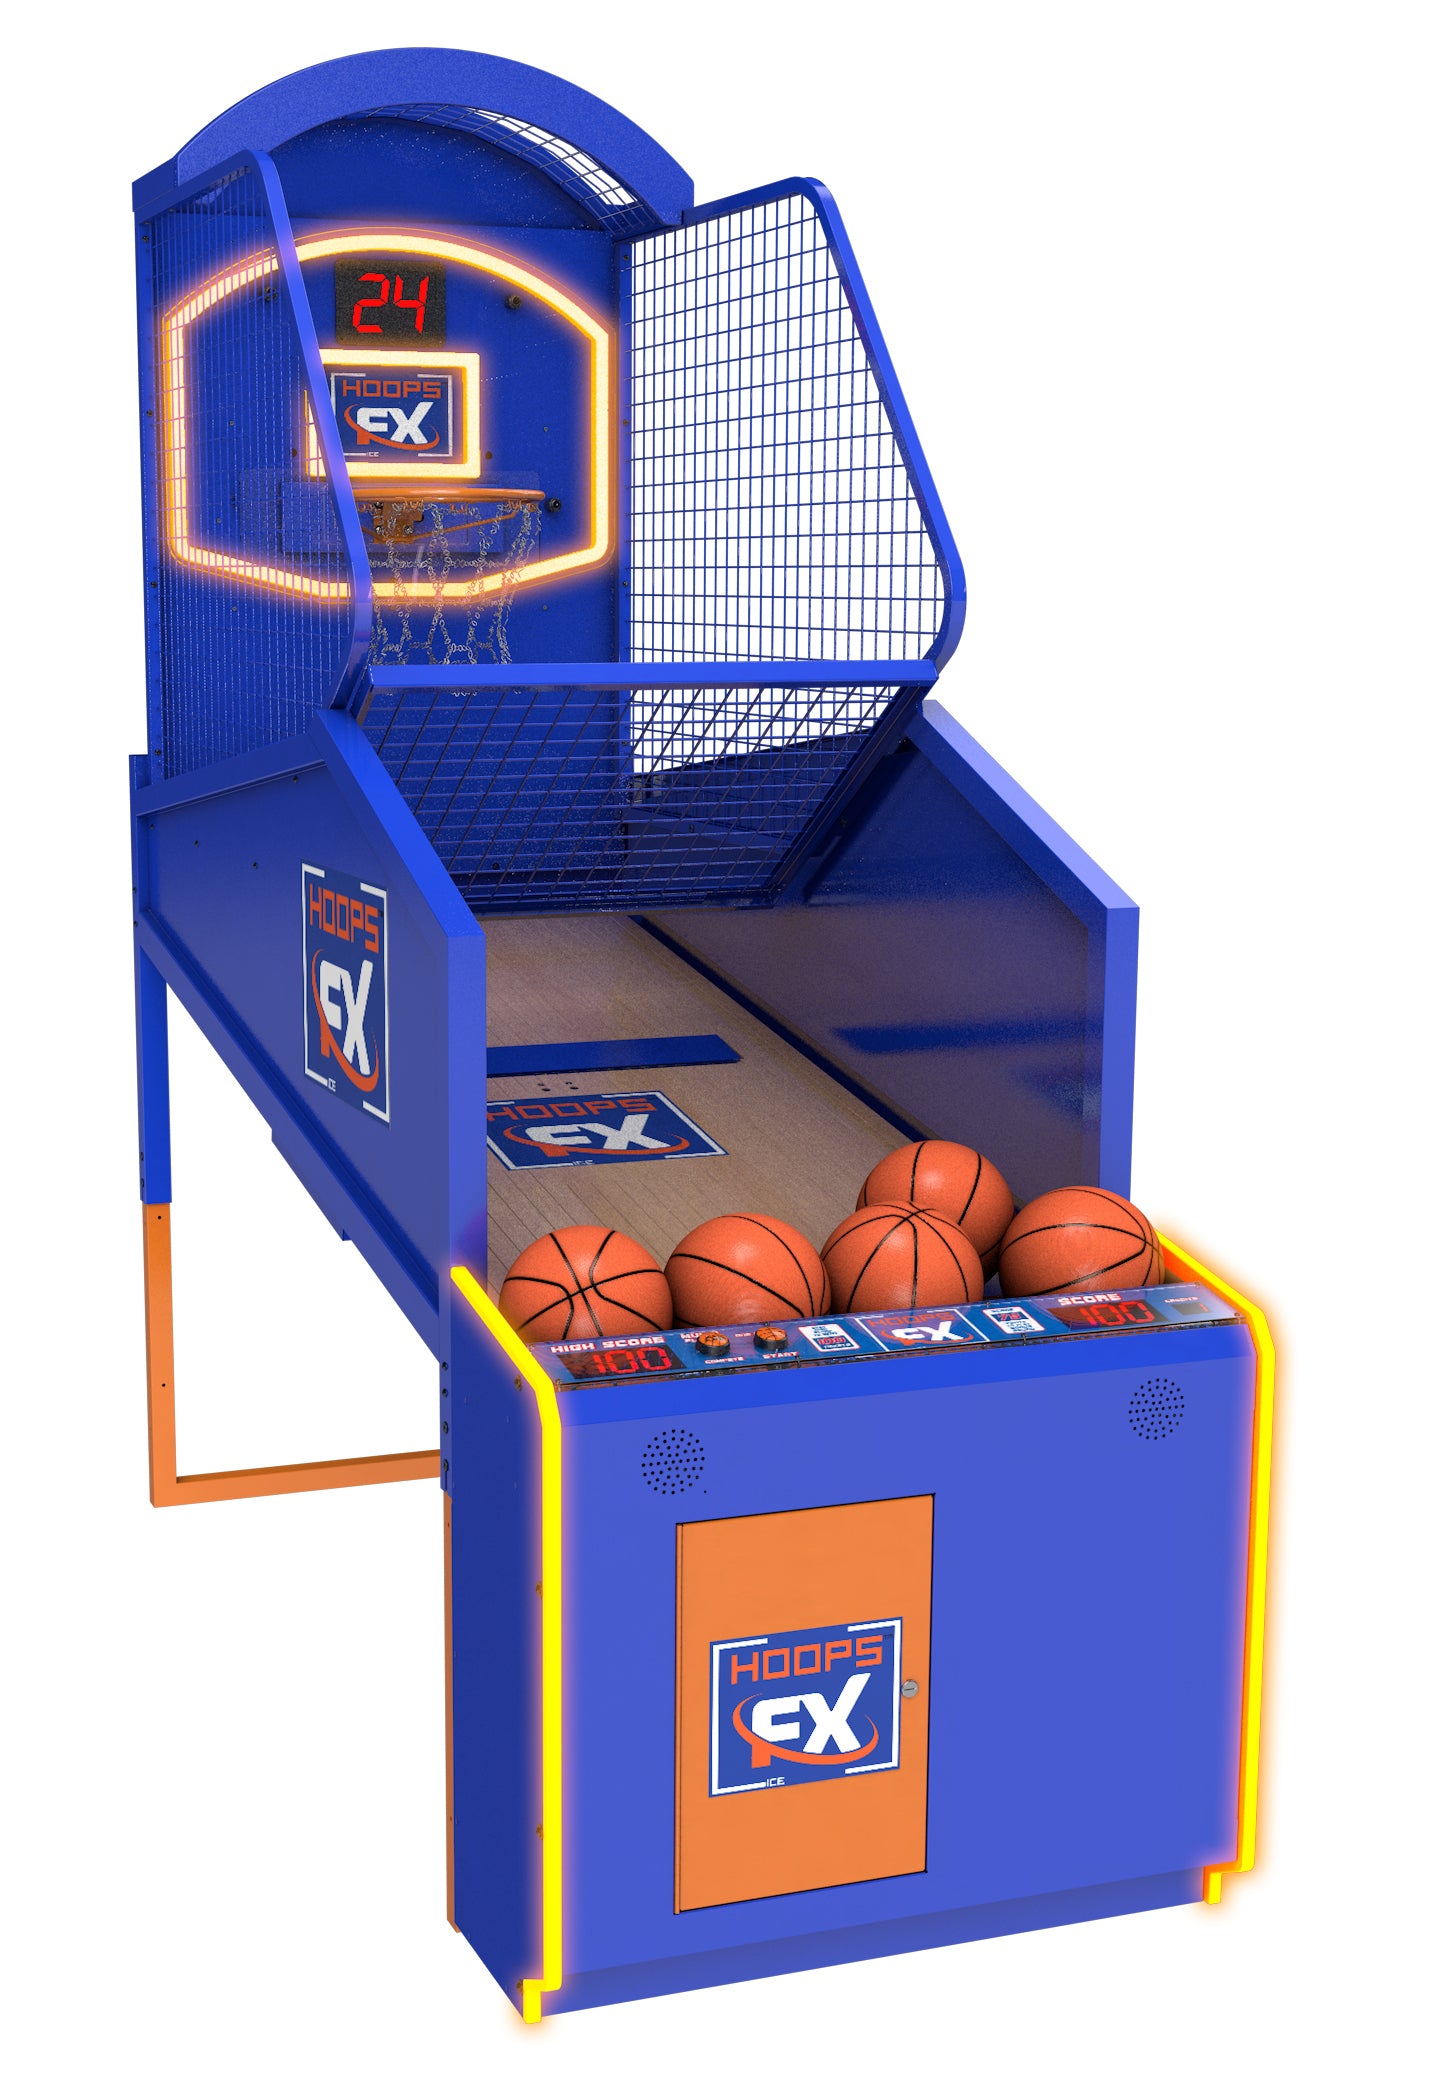 Hoops FX Basketball Arcade Game